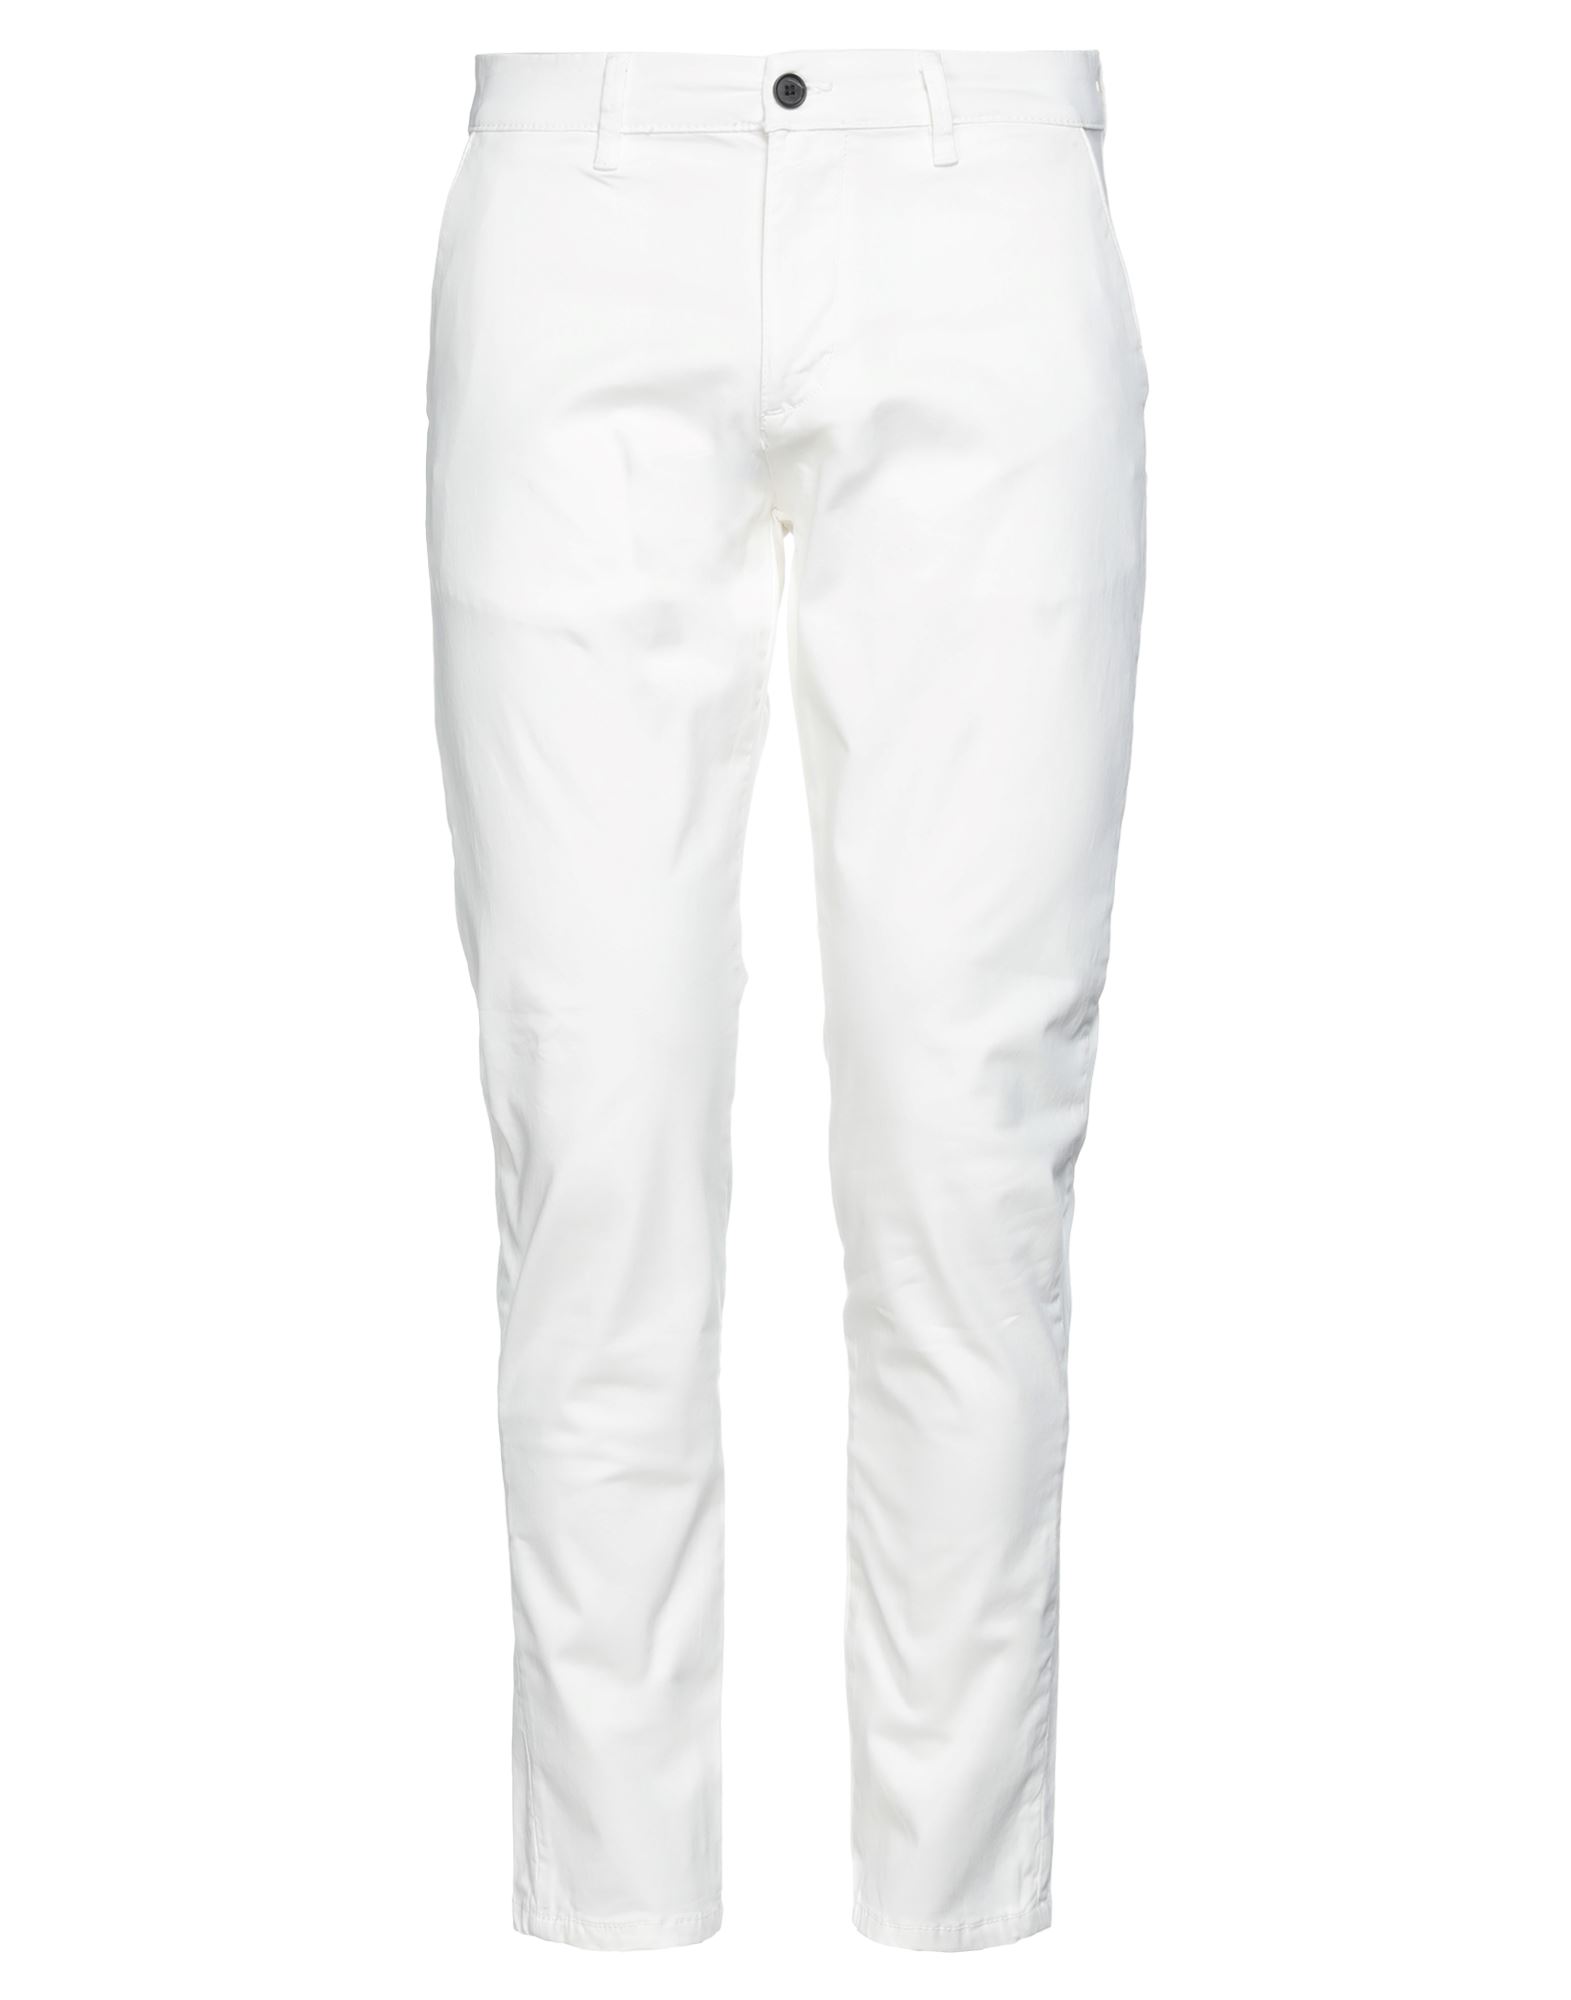 Hamaki-ho Pants In White